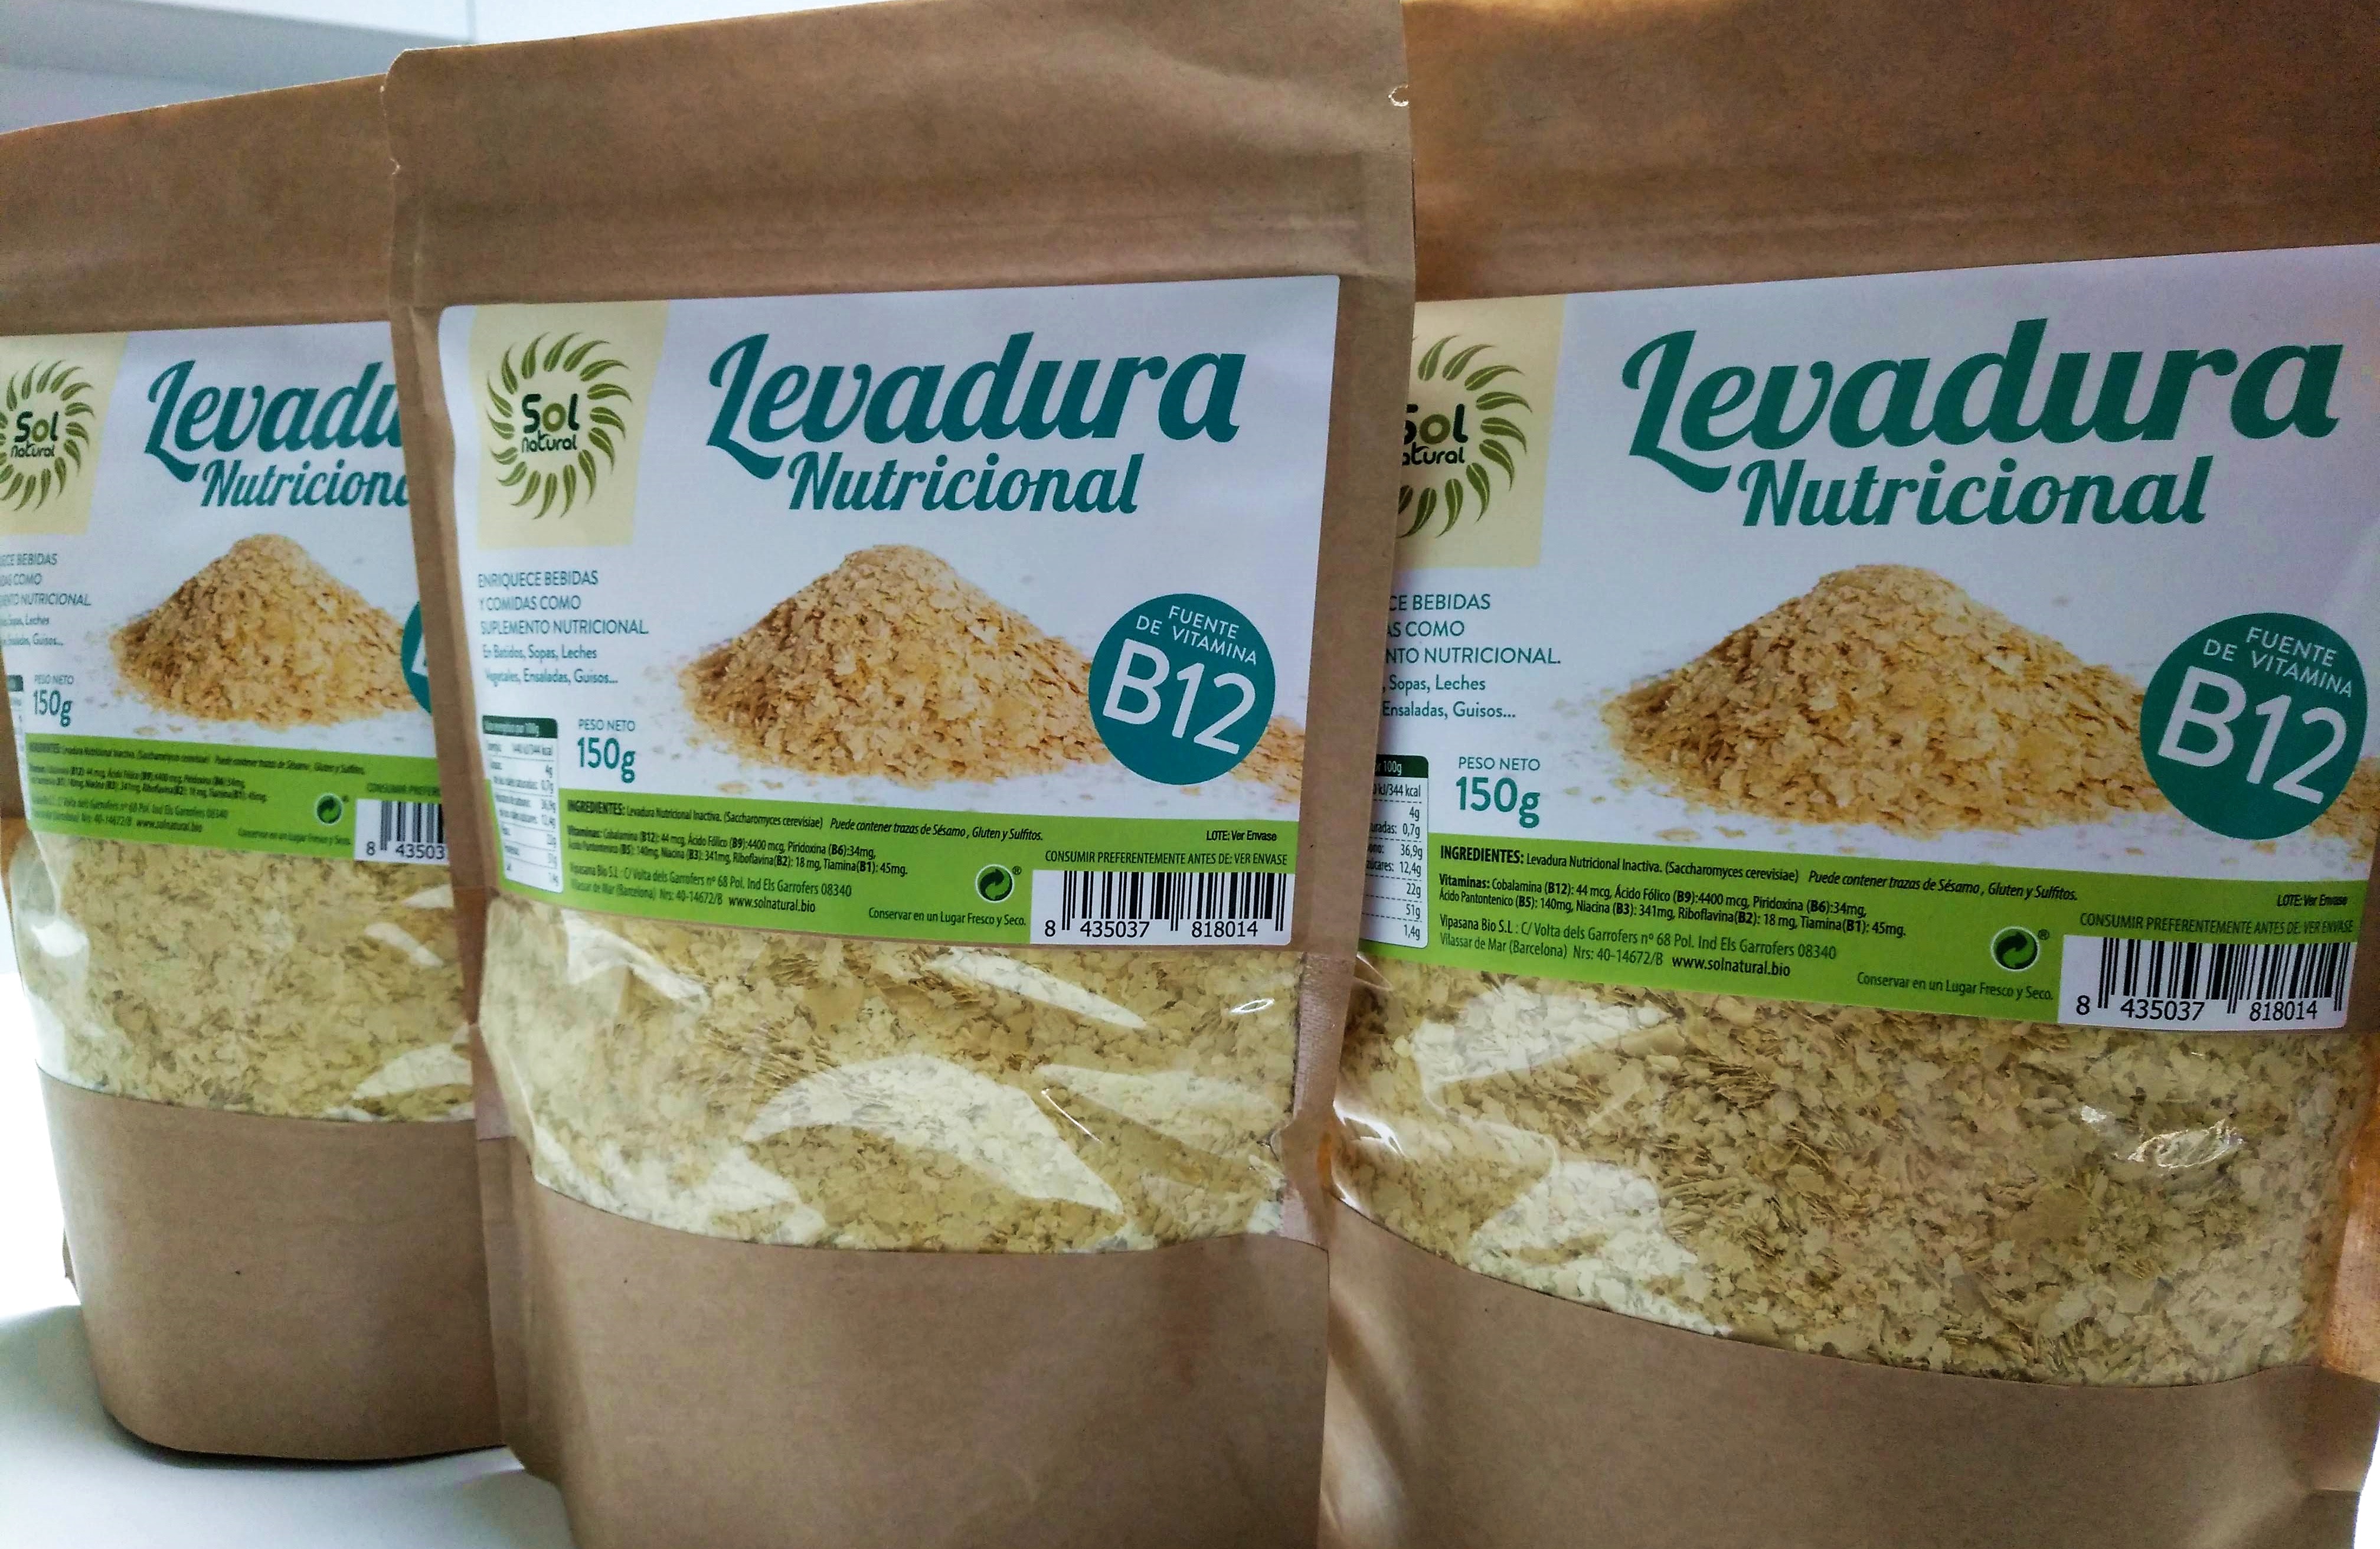 https://ecotiendacibeles.es/wp-content/uploads/Levadura-nutricional.jpg